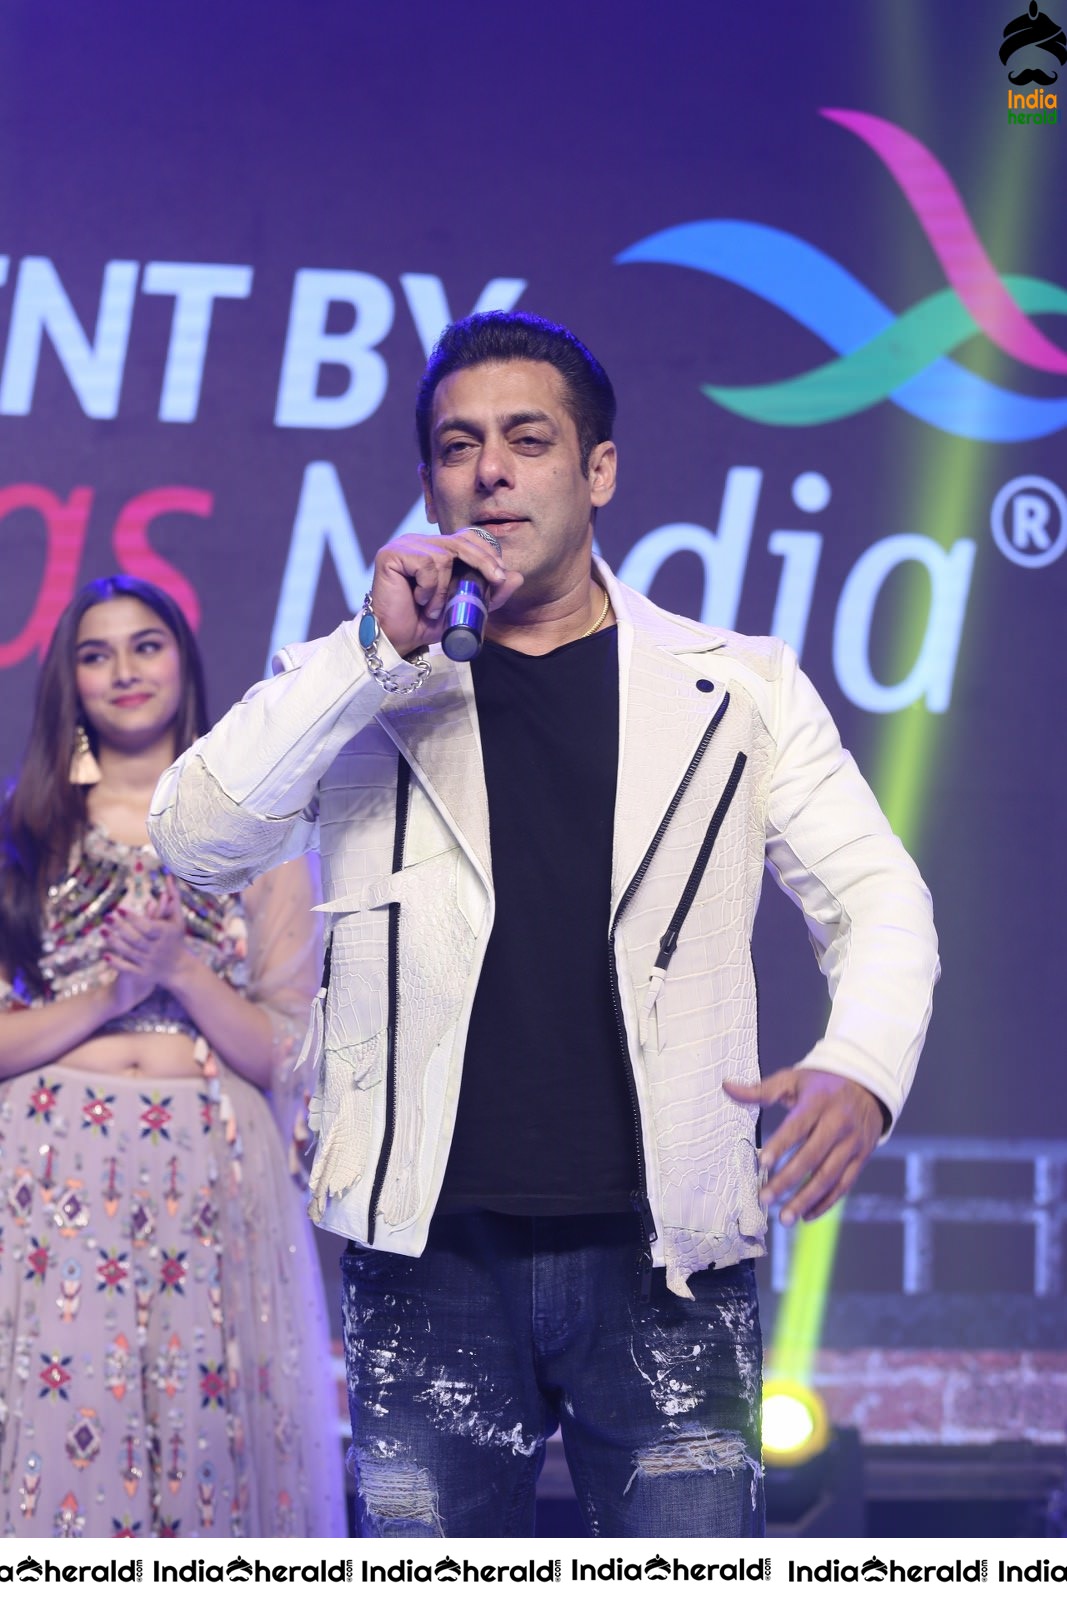 Actor Salman Khan Powerful Speech On the Stage Set 2